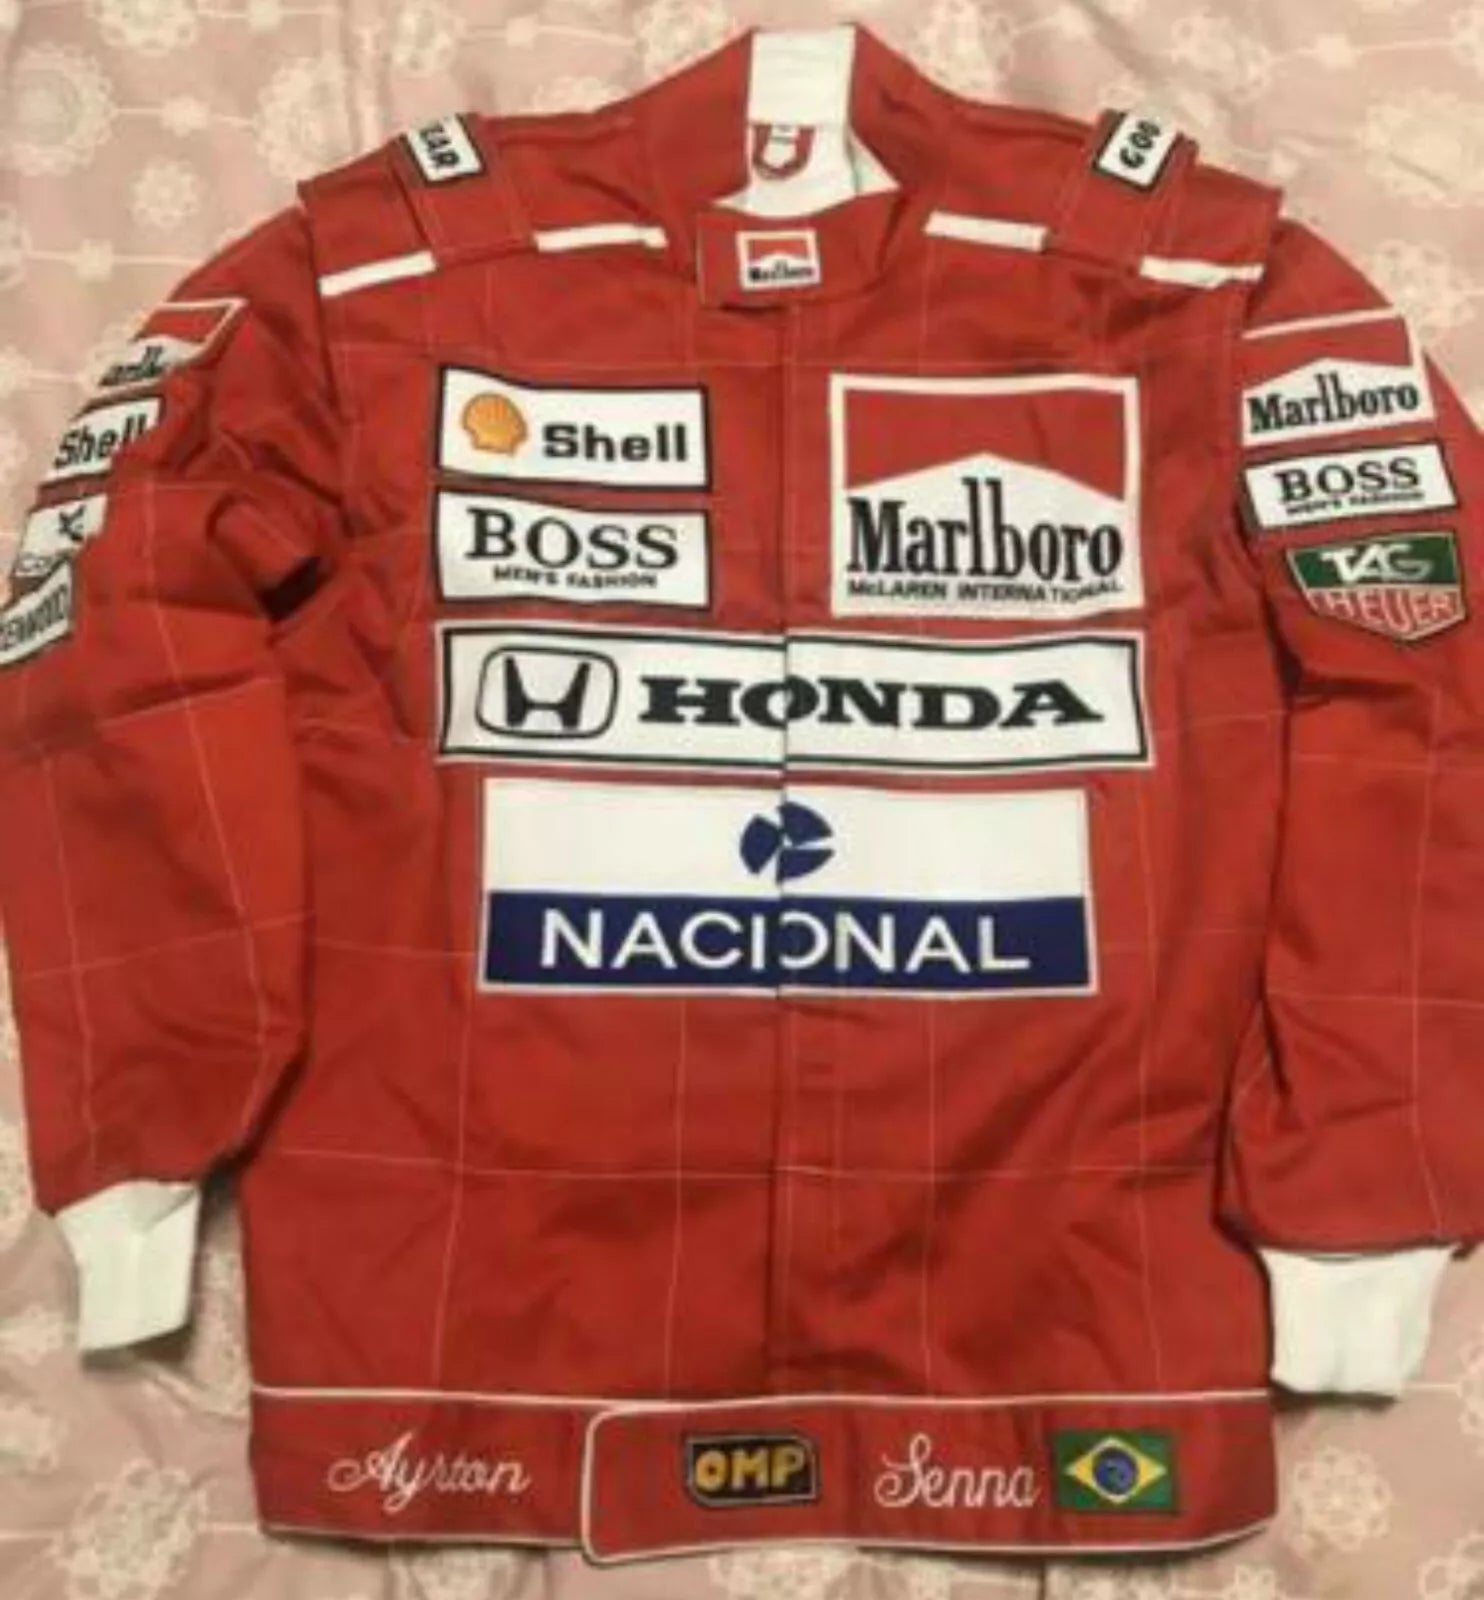 Ayrton Senna Embroidered Patches go kart Jacket